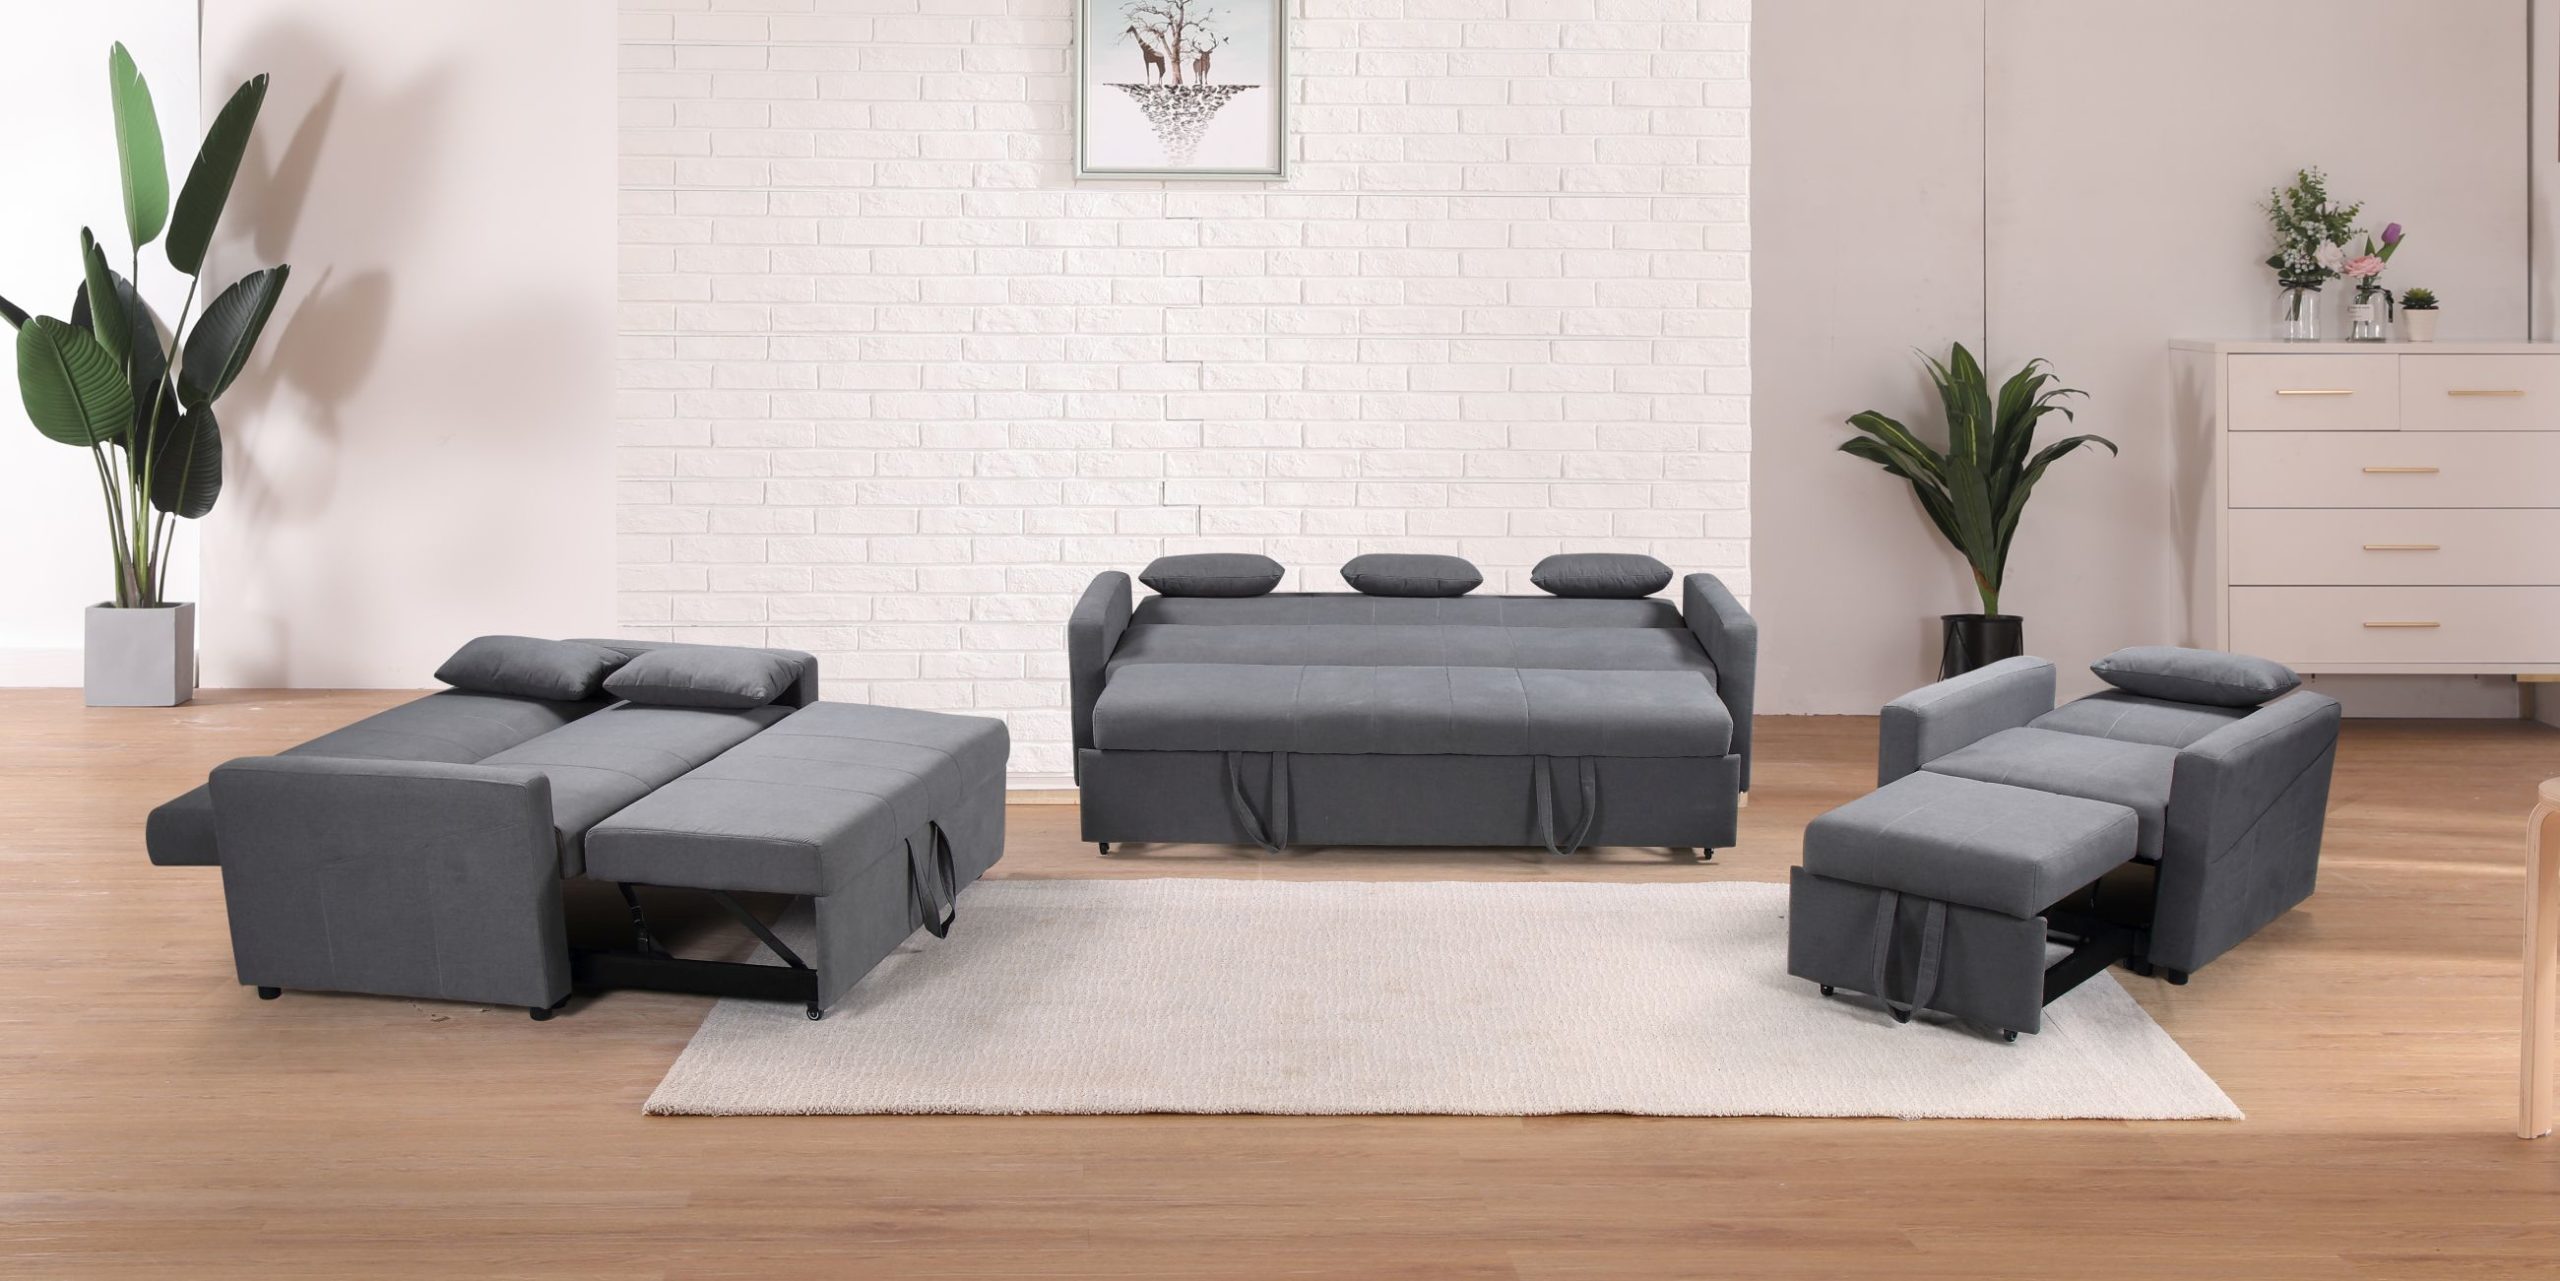 sofa & bed transformer furniture